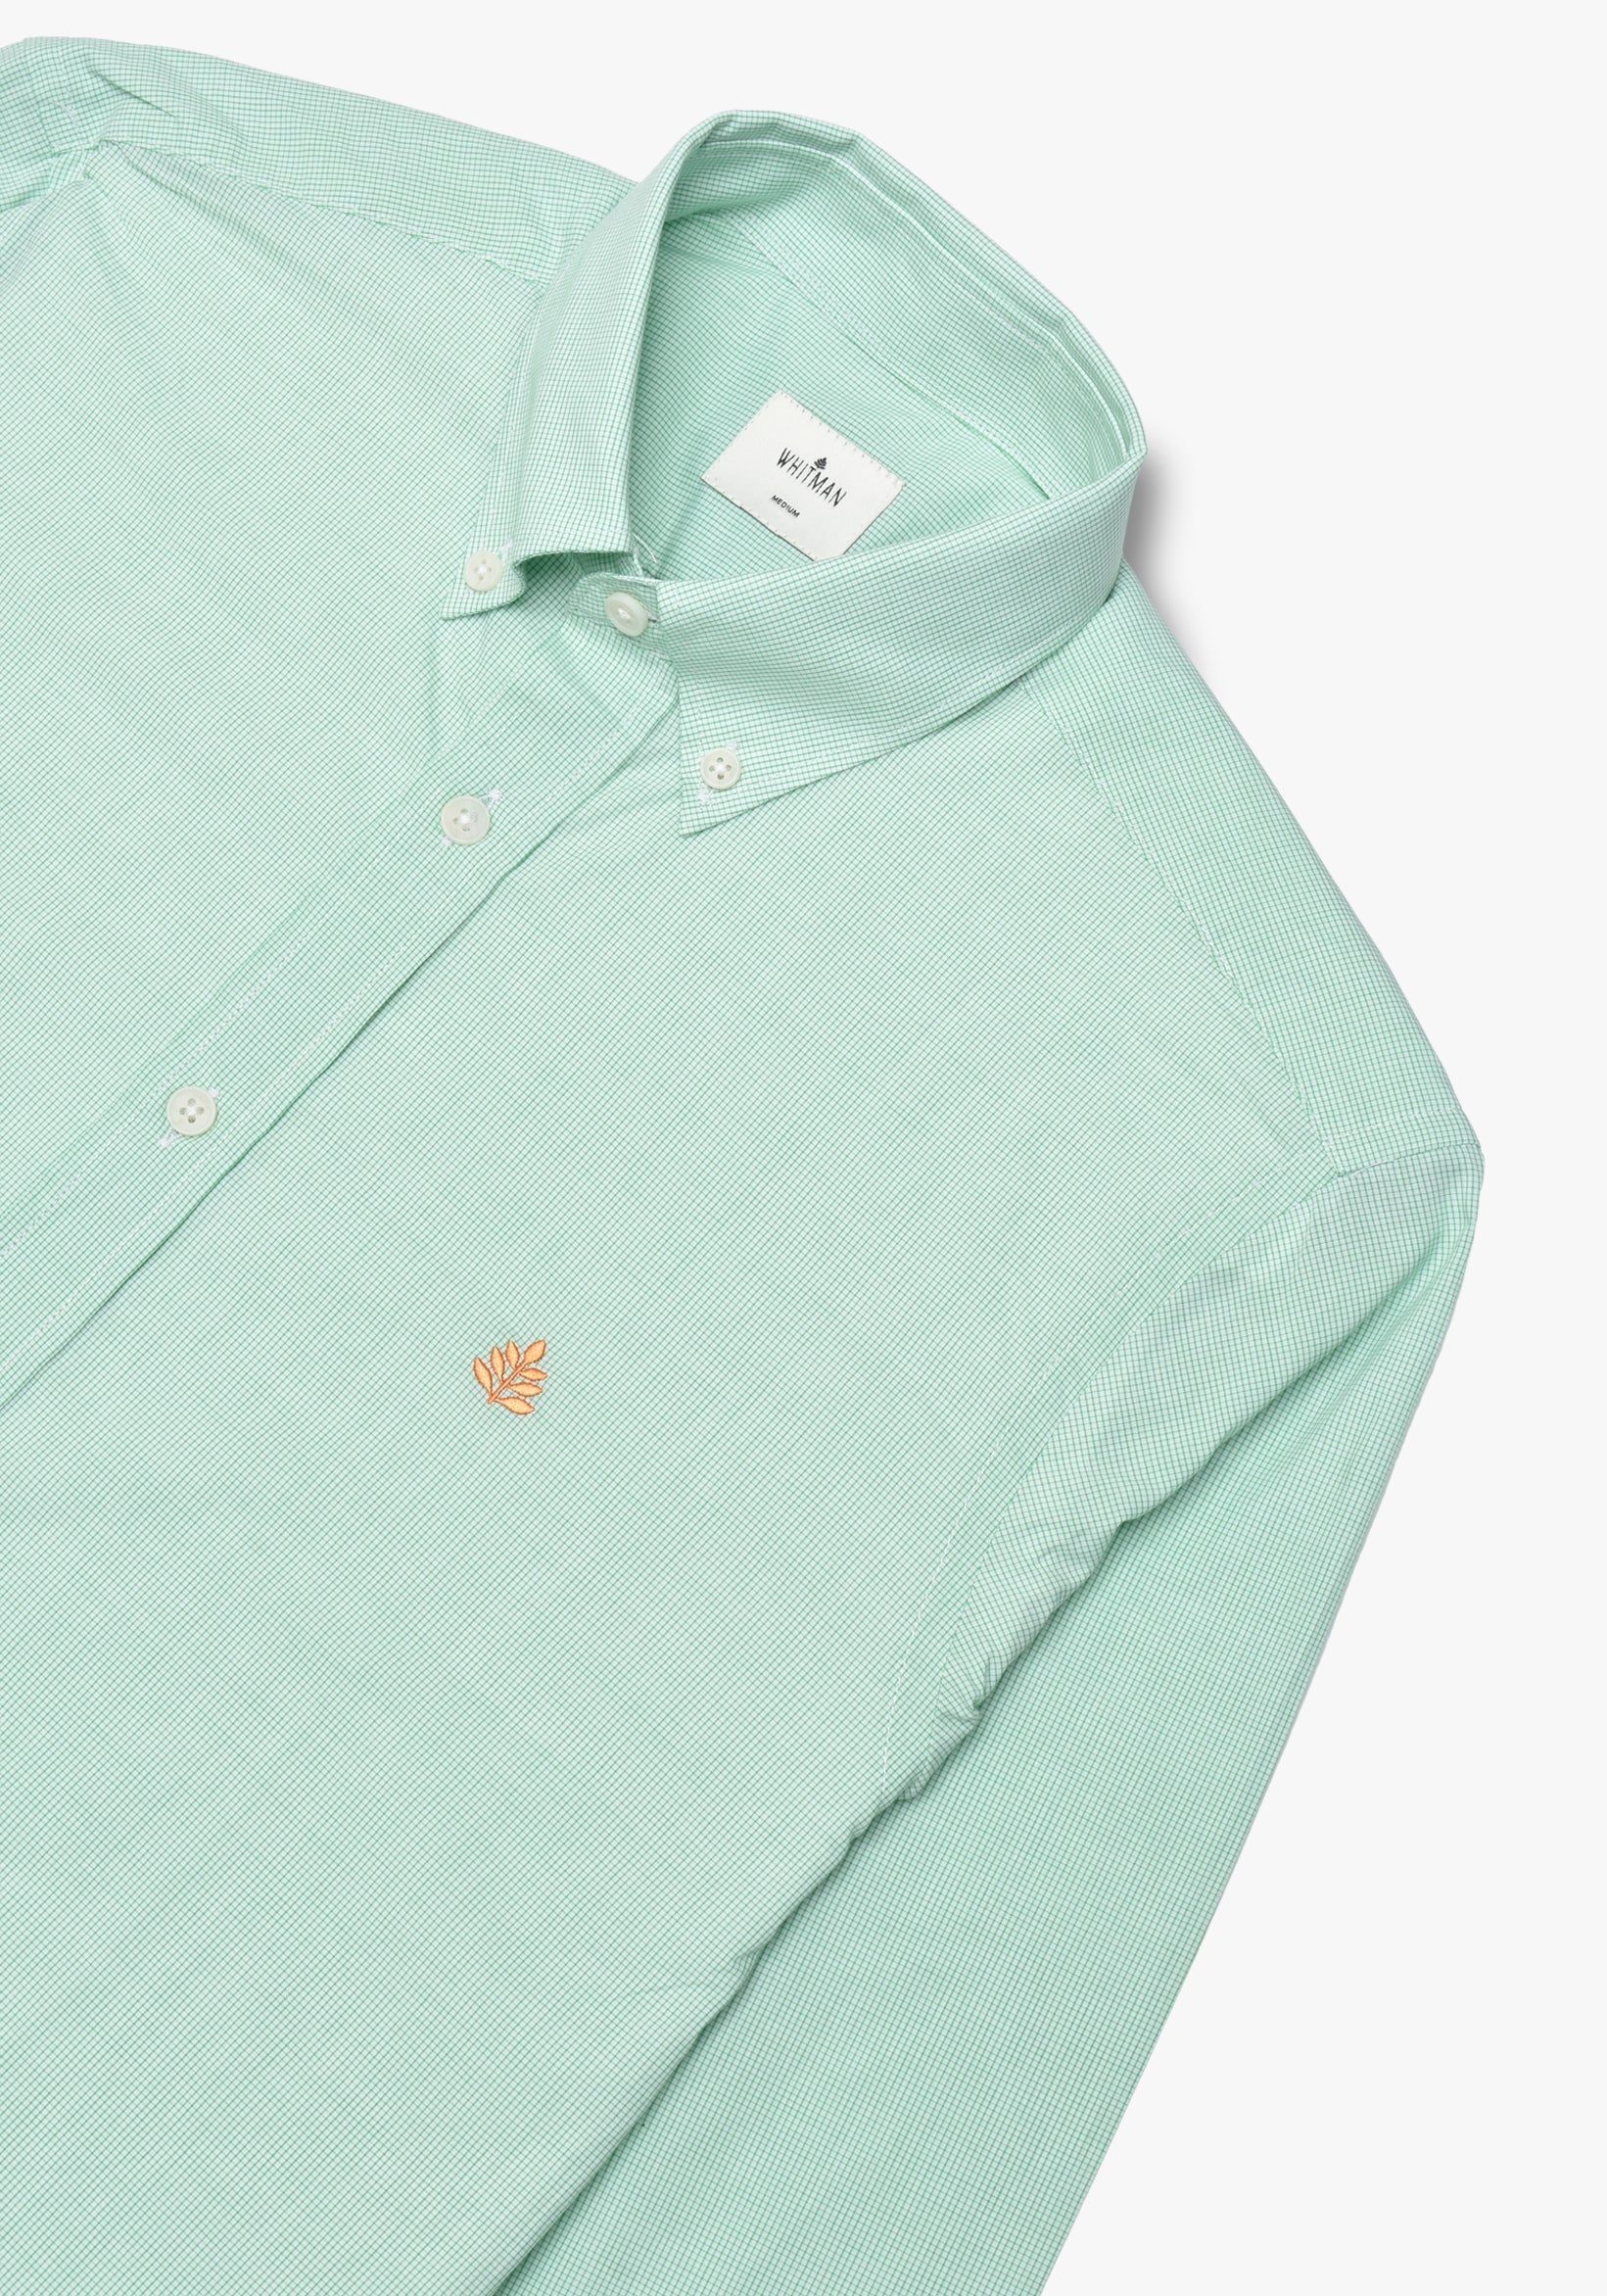 Camisa Whitman Cuadros Pequeños Verde - Blanco Cuello Button Down